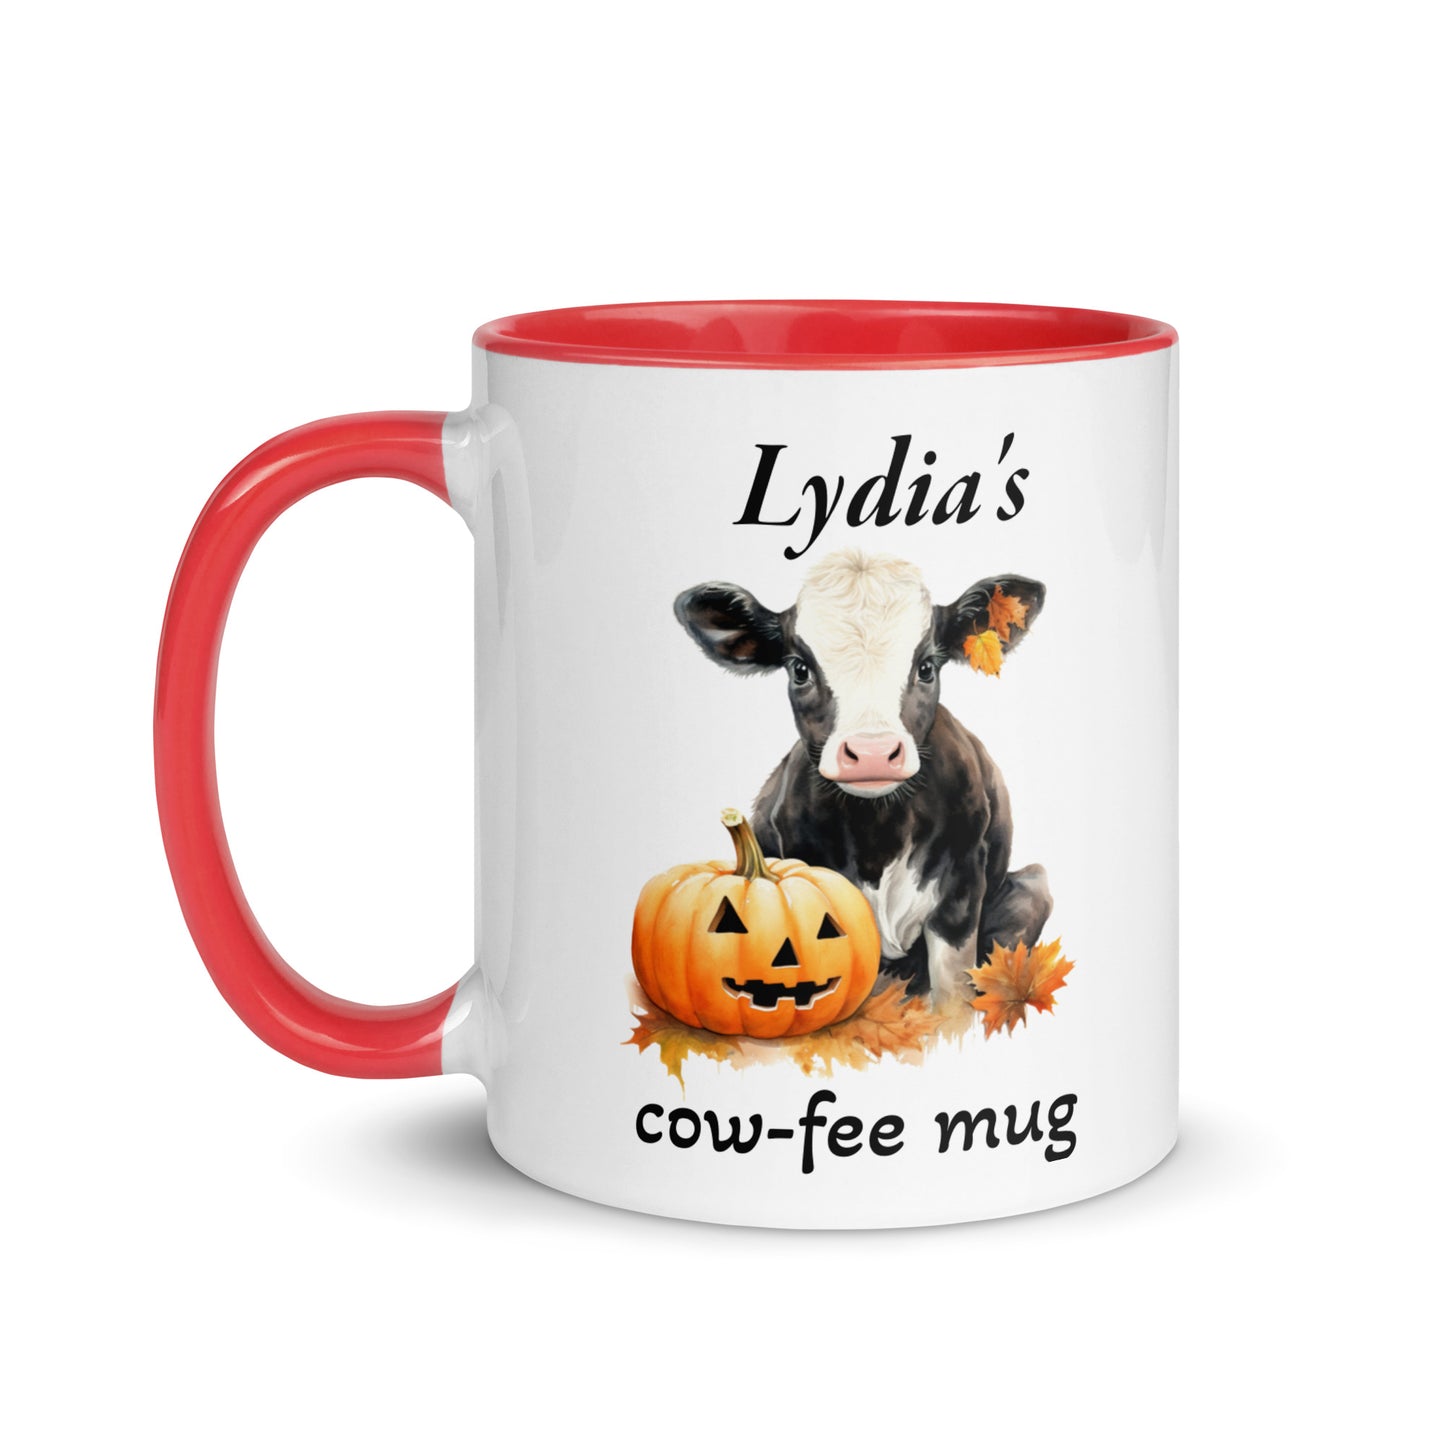 Personalized Cow-fee Mug